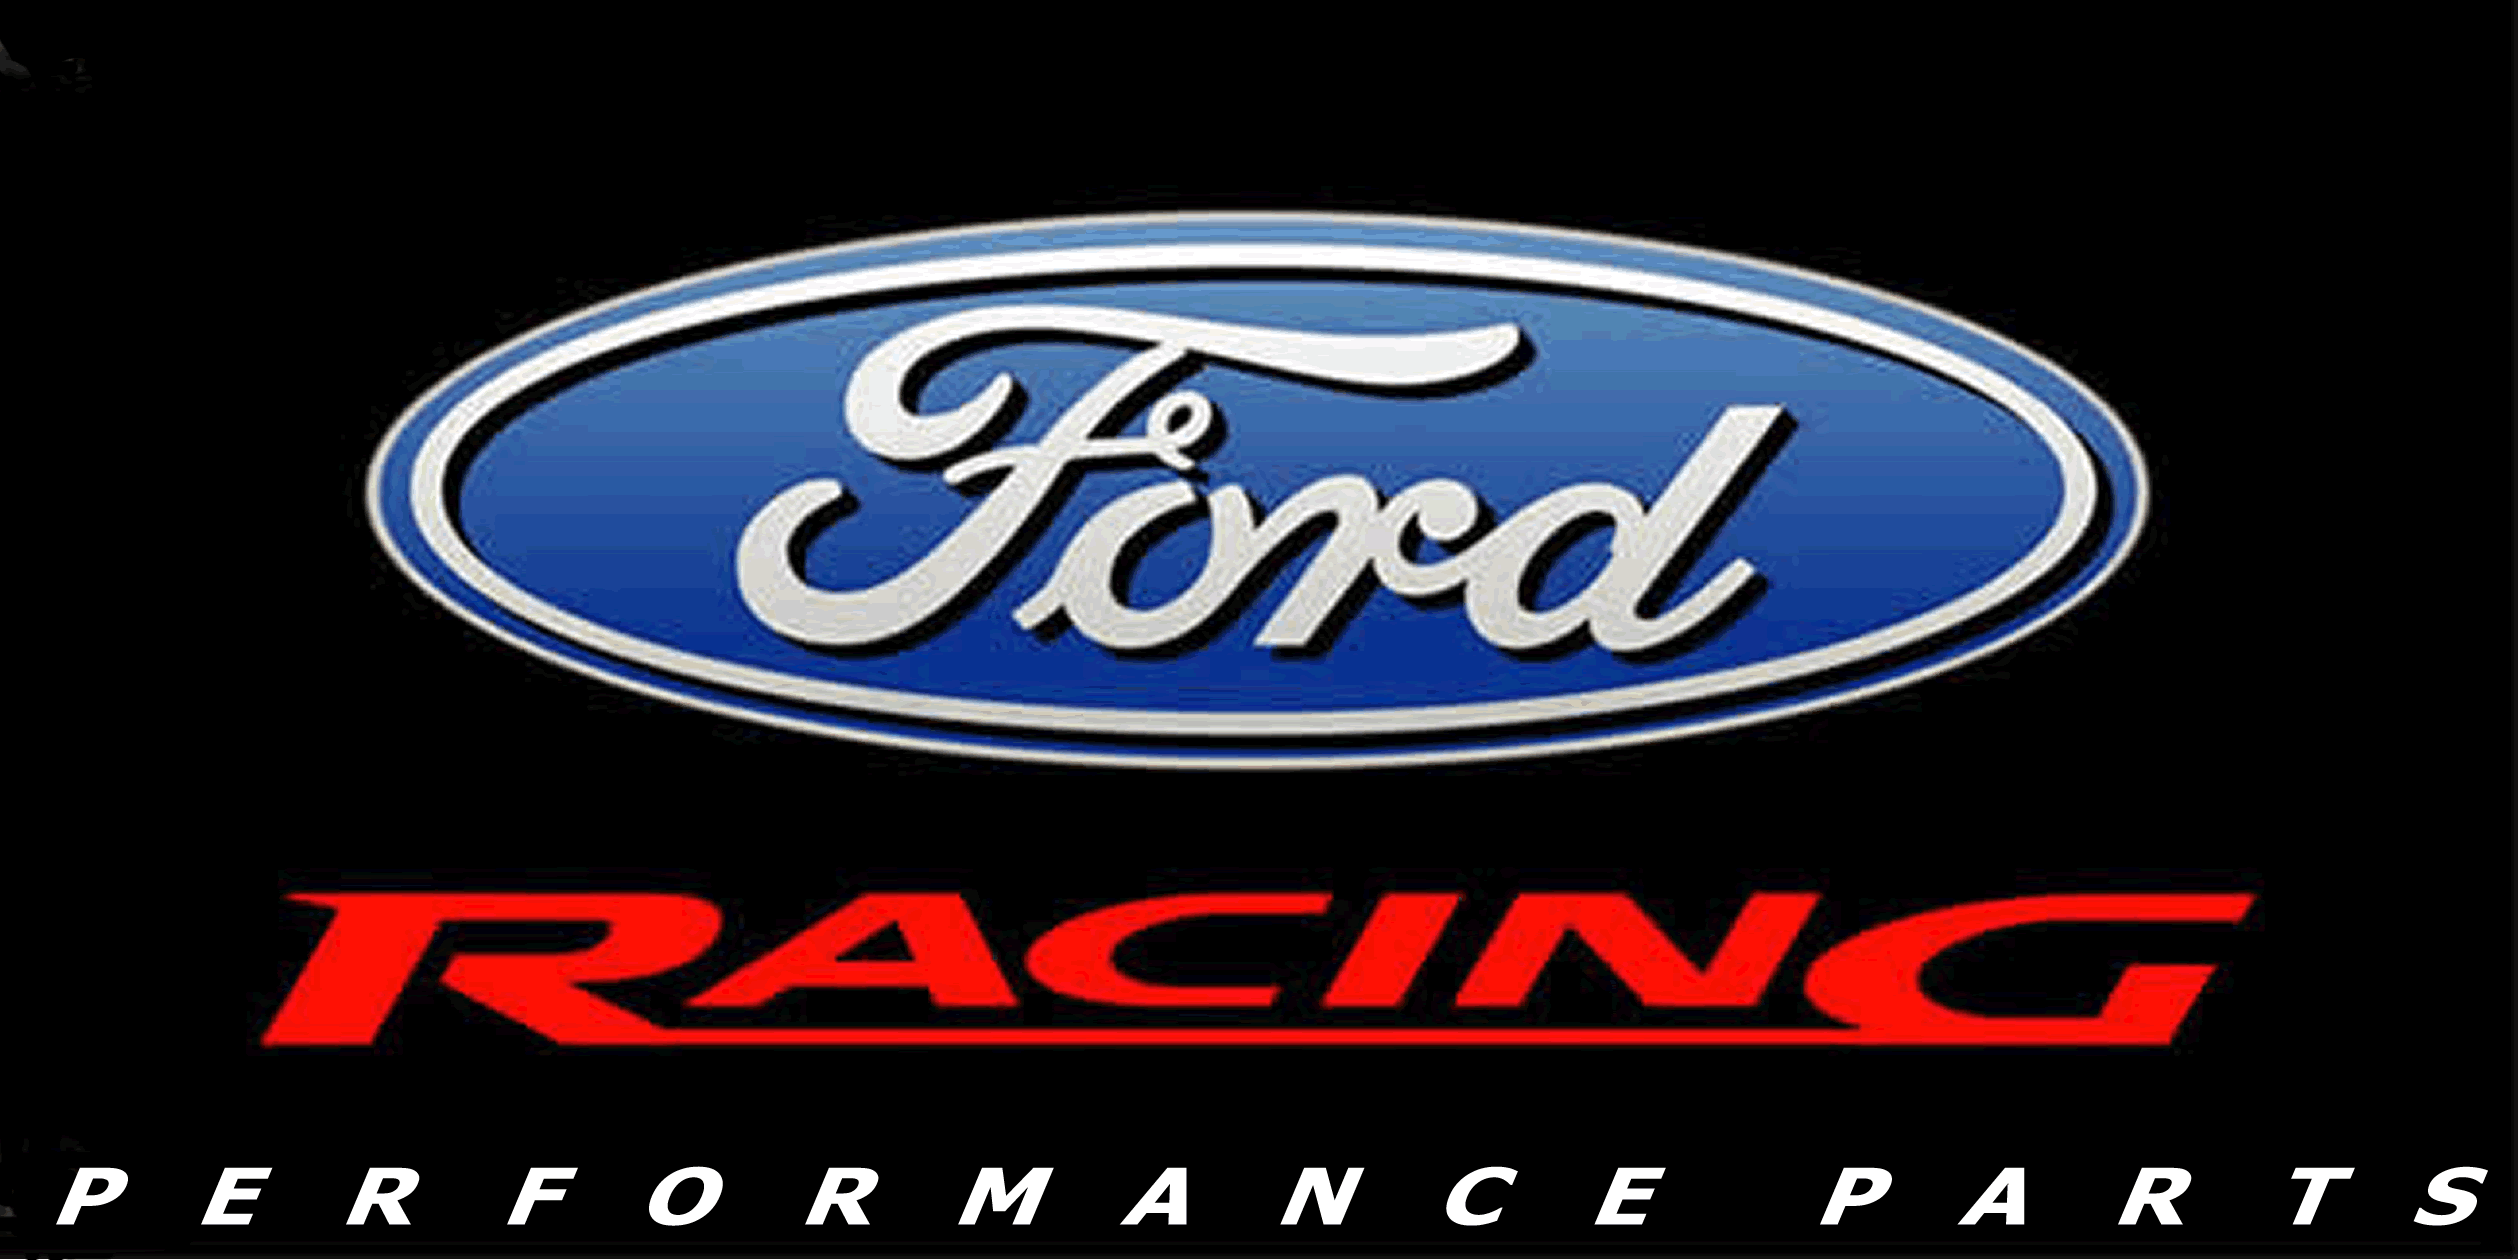 Black Ford Racing Logo